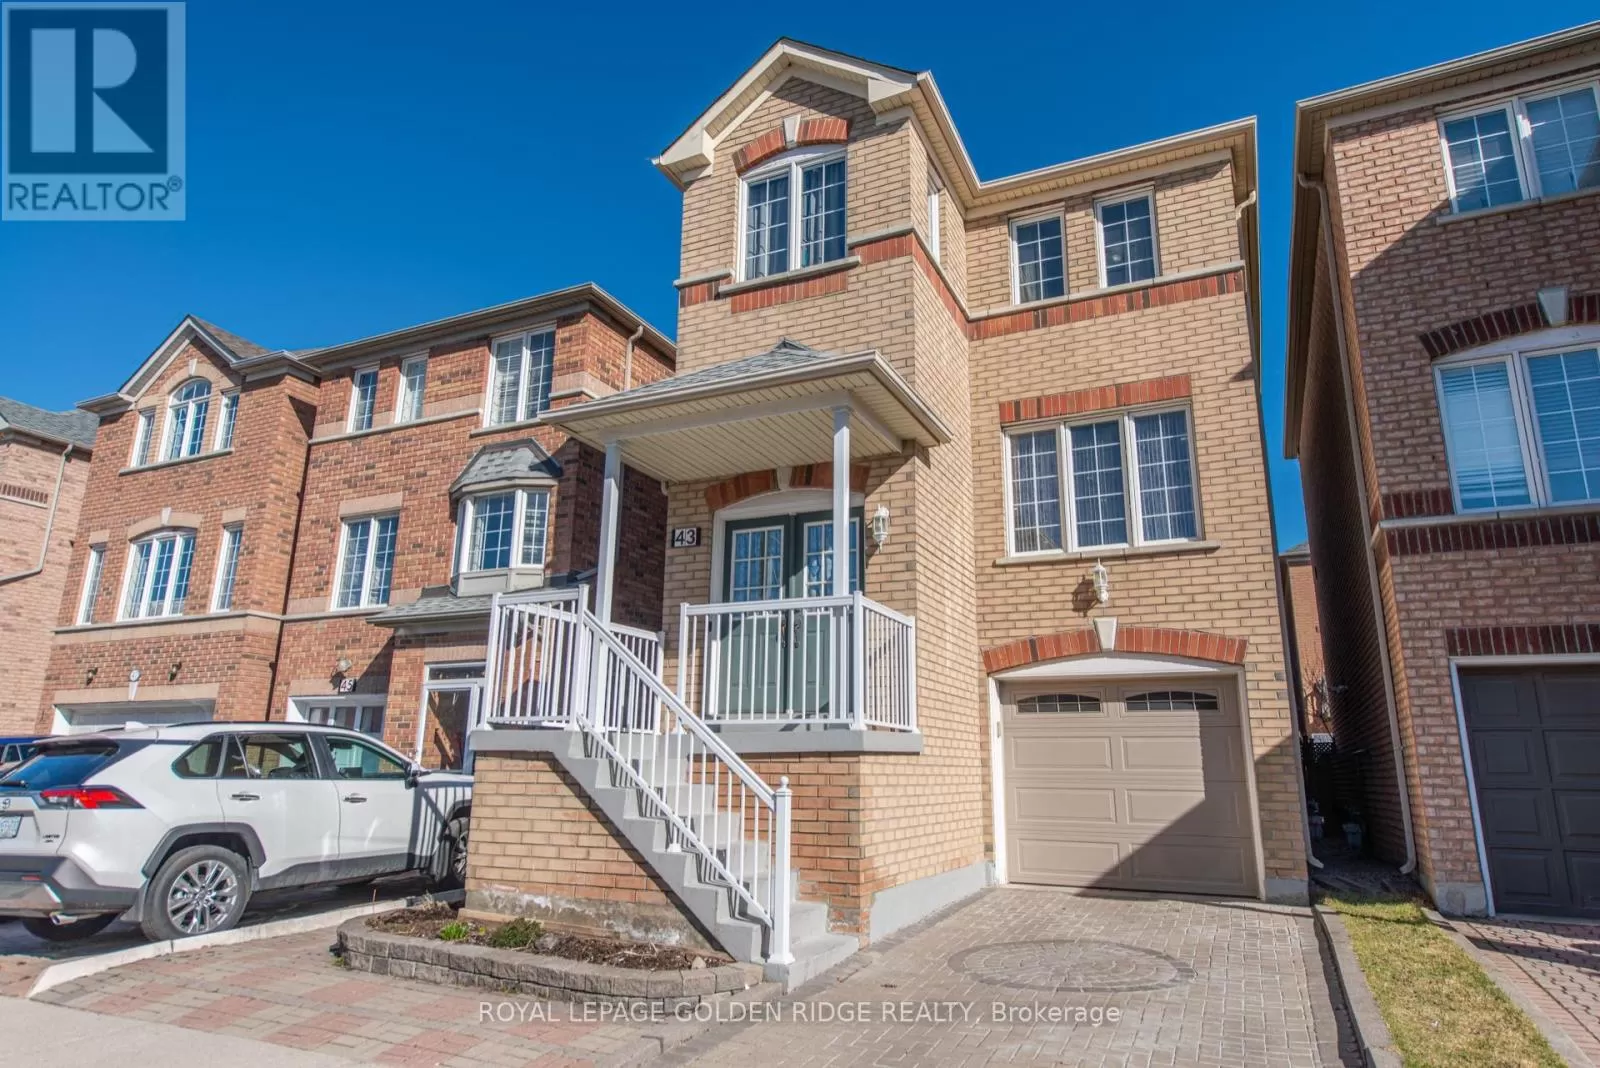 House for rent: 43 Millenium Drive, Toronto, Ontario M6M 5K5